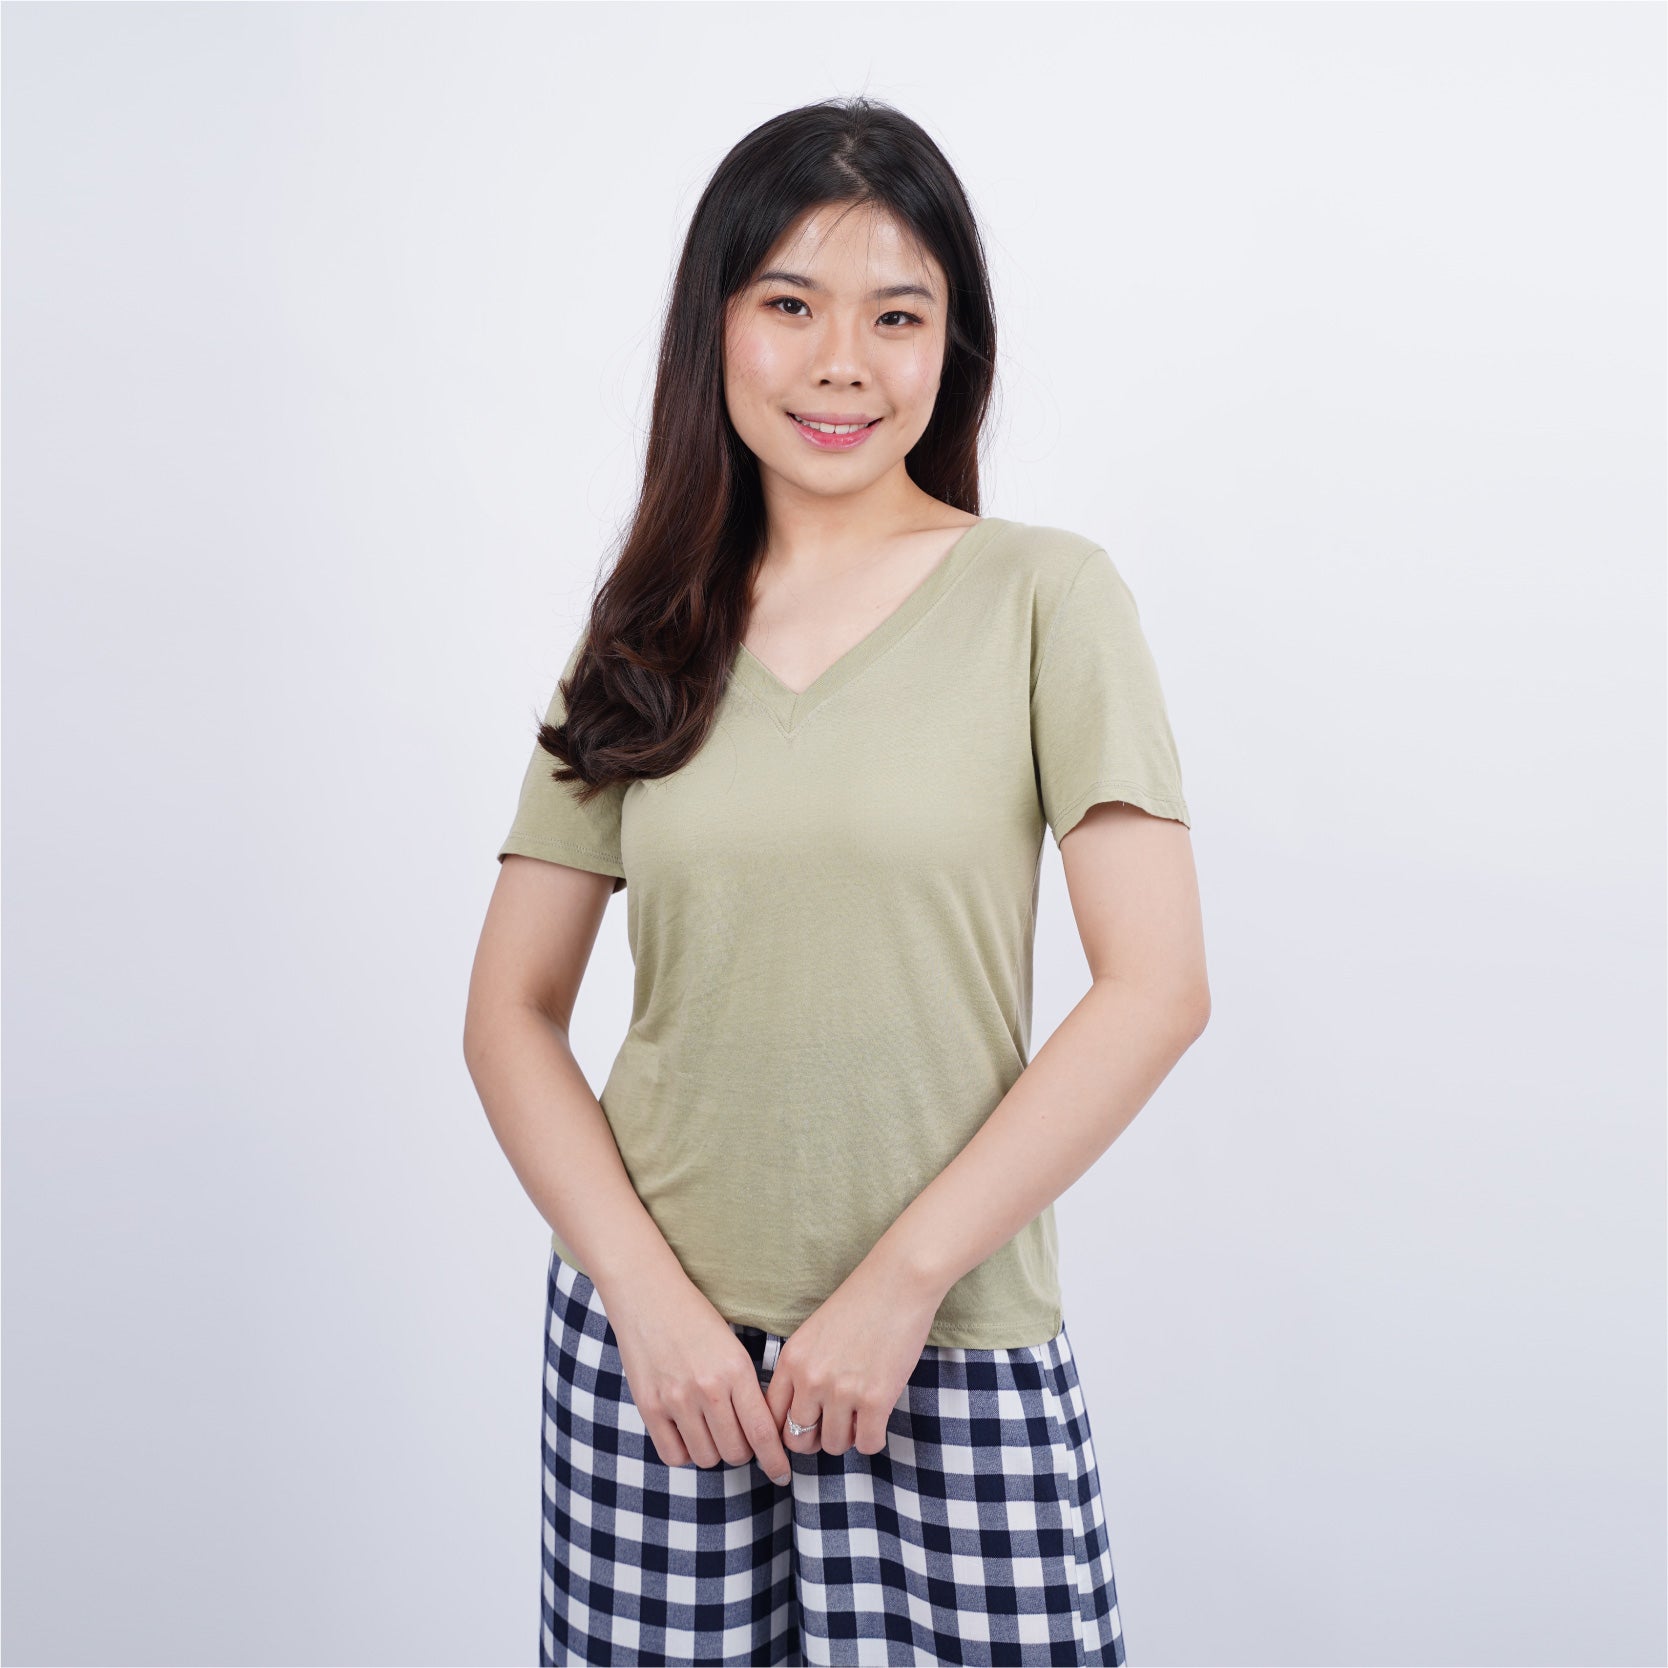 Kaos V-neck Wanita Lengan Pendek Tersedia 12 Warna [MYFVR 01]